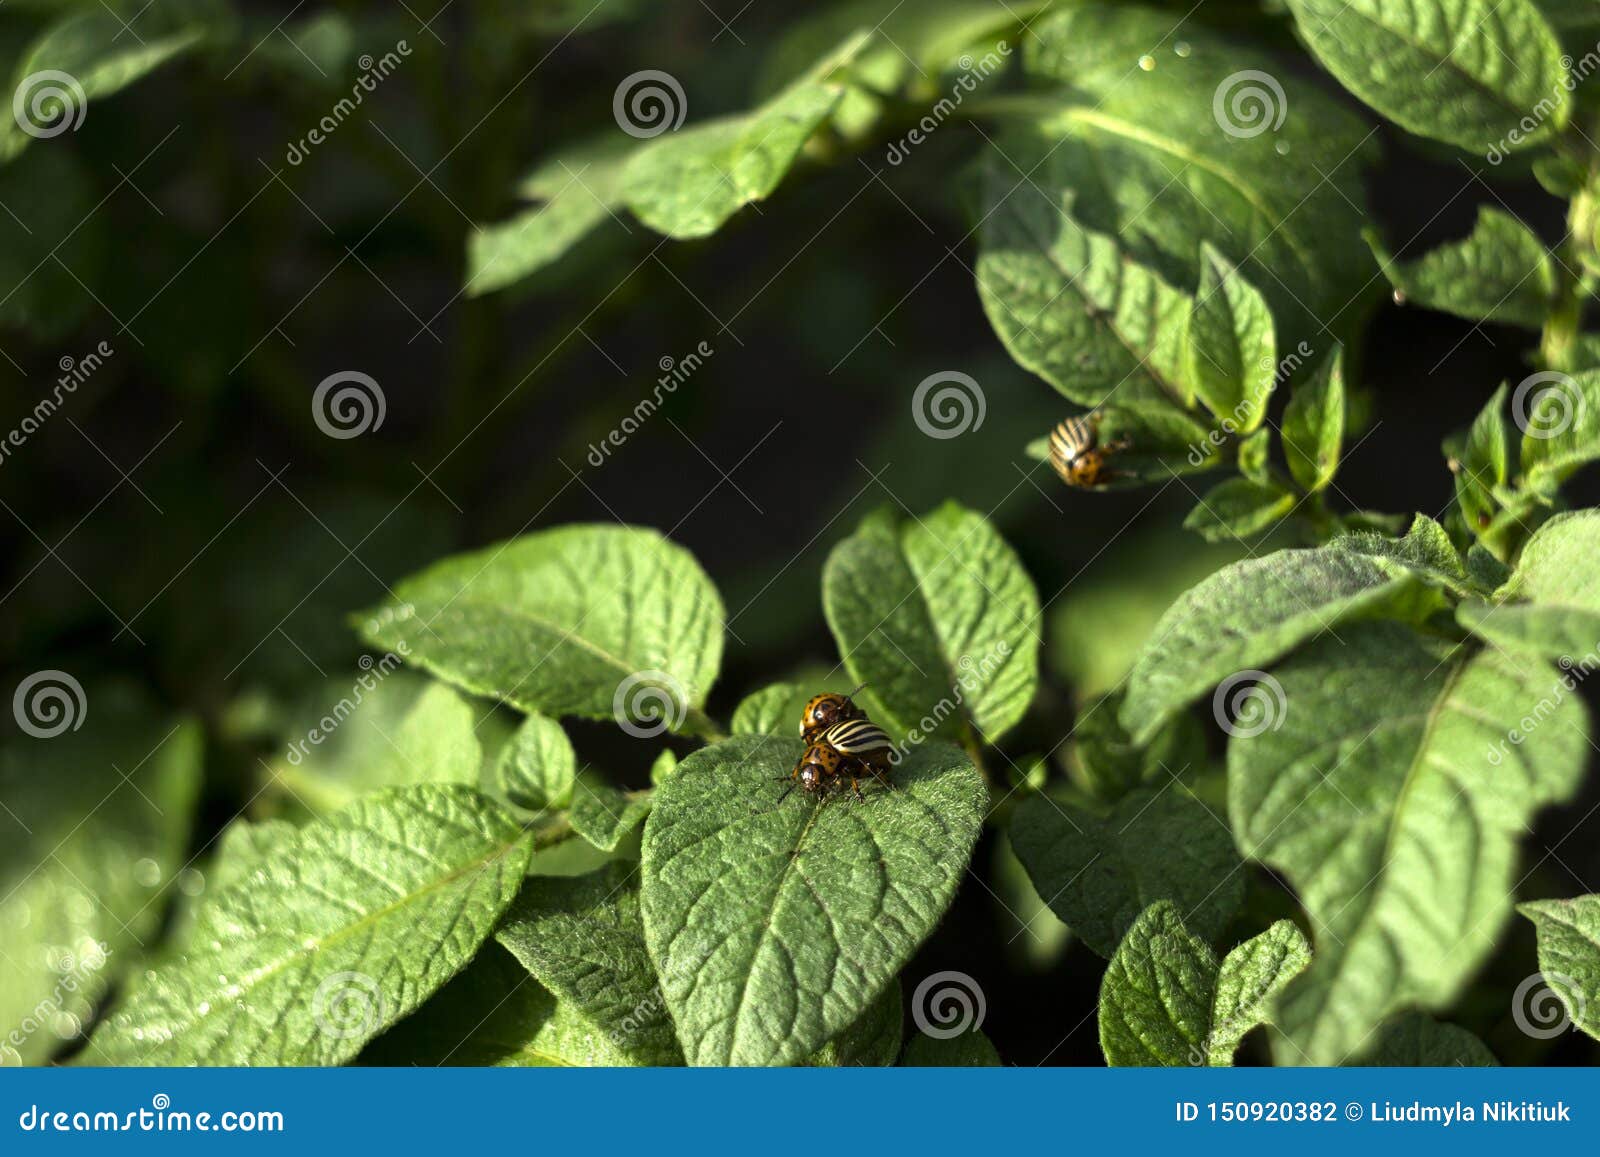 Colorado Potato Beetle Eat The Leaves Of A Flowering Potato A